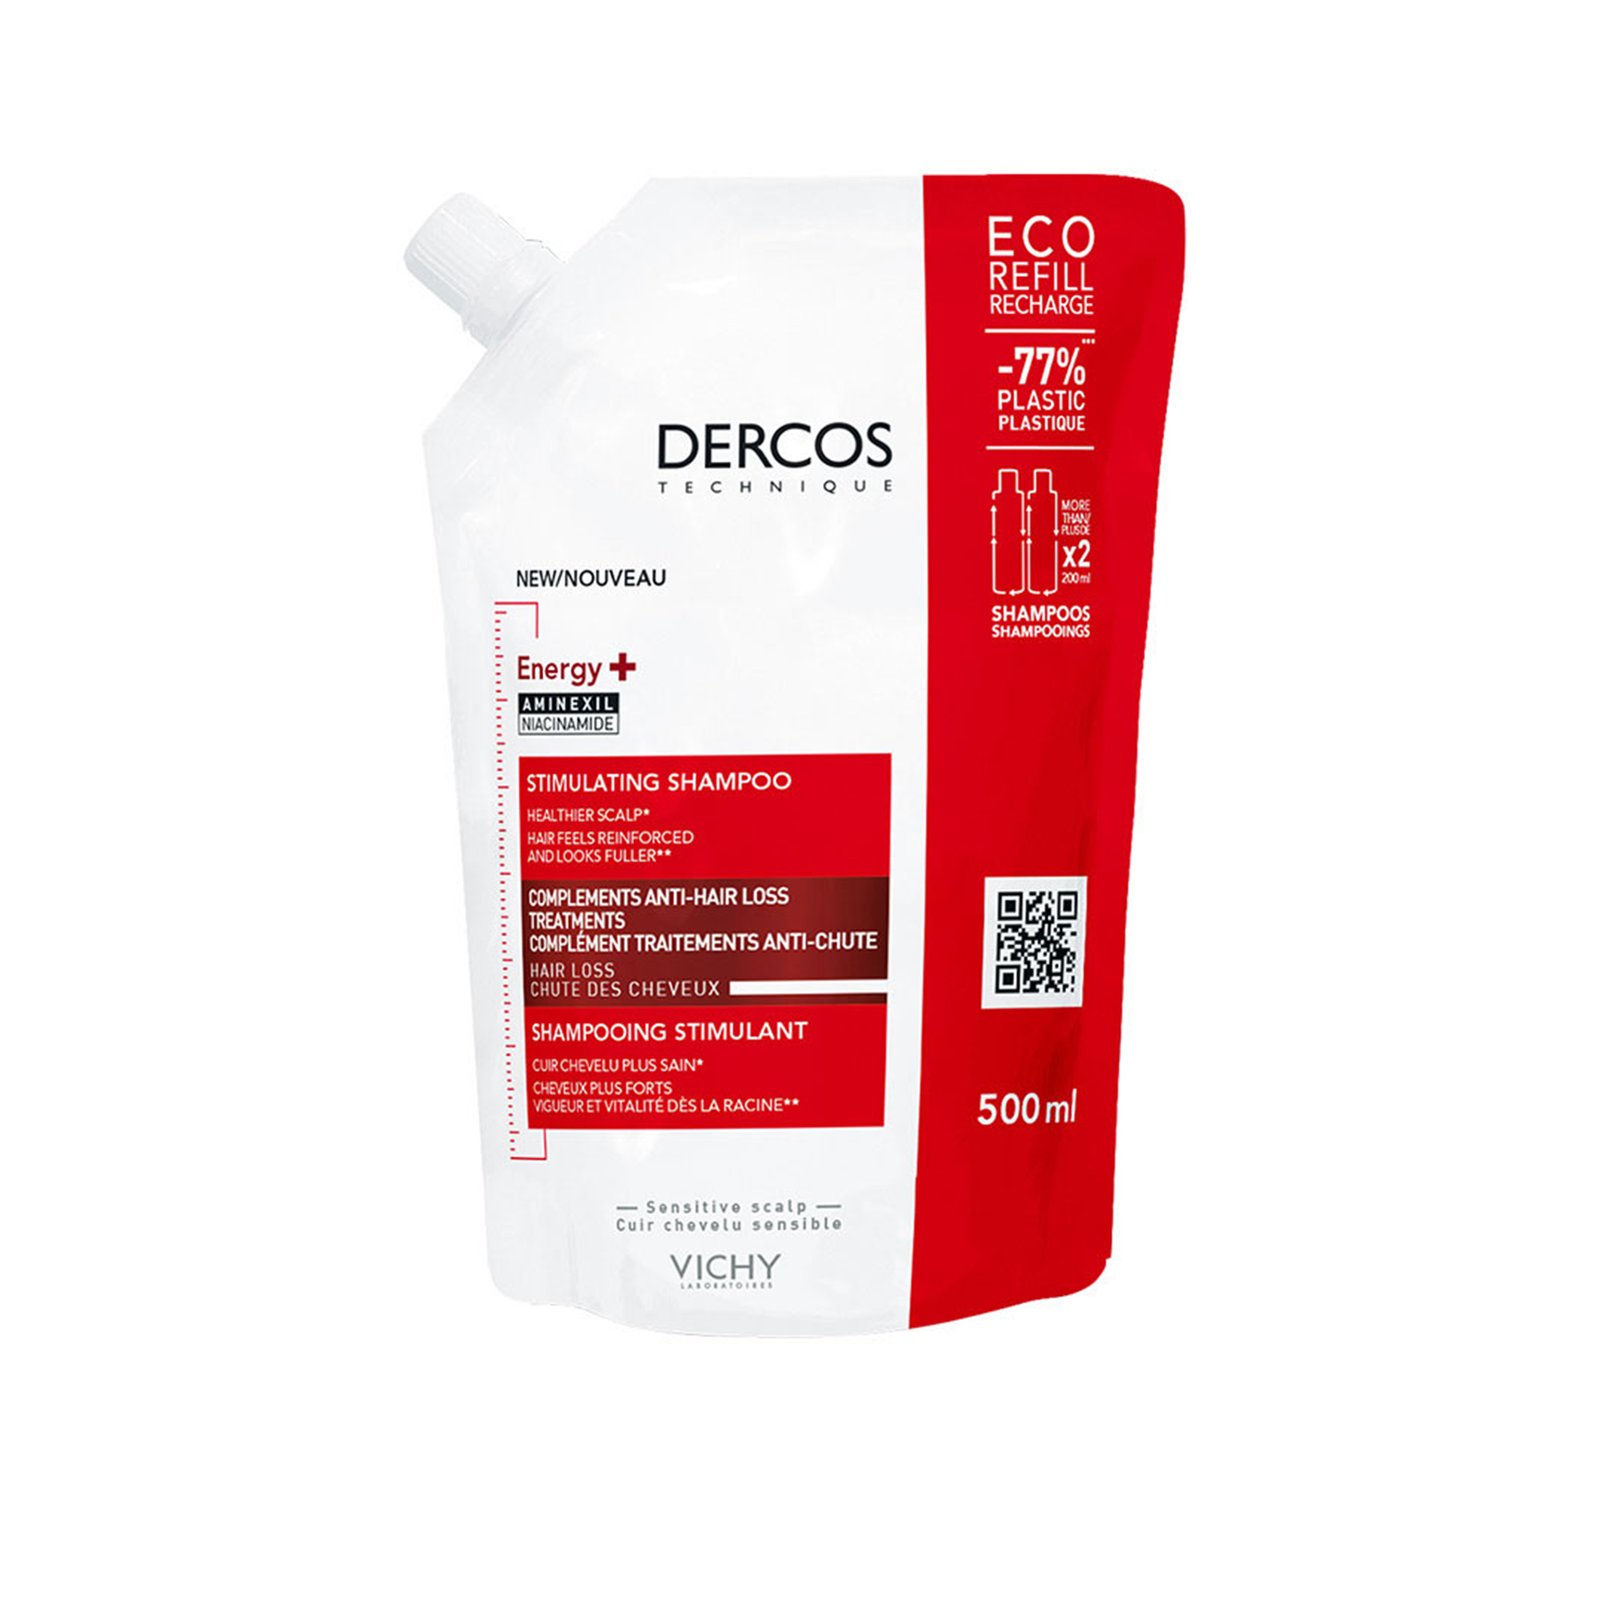 Vichy Dercos Energising Stimulating Shampoo Refill 500ml